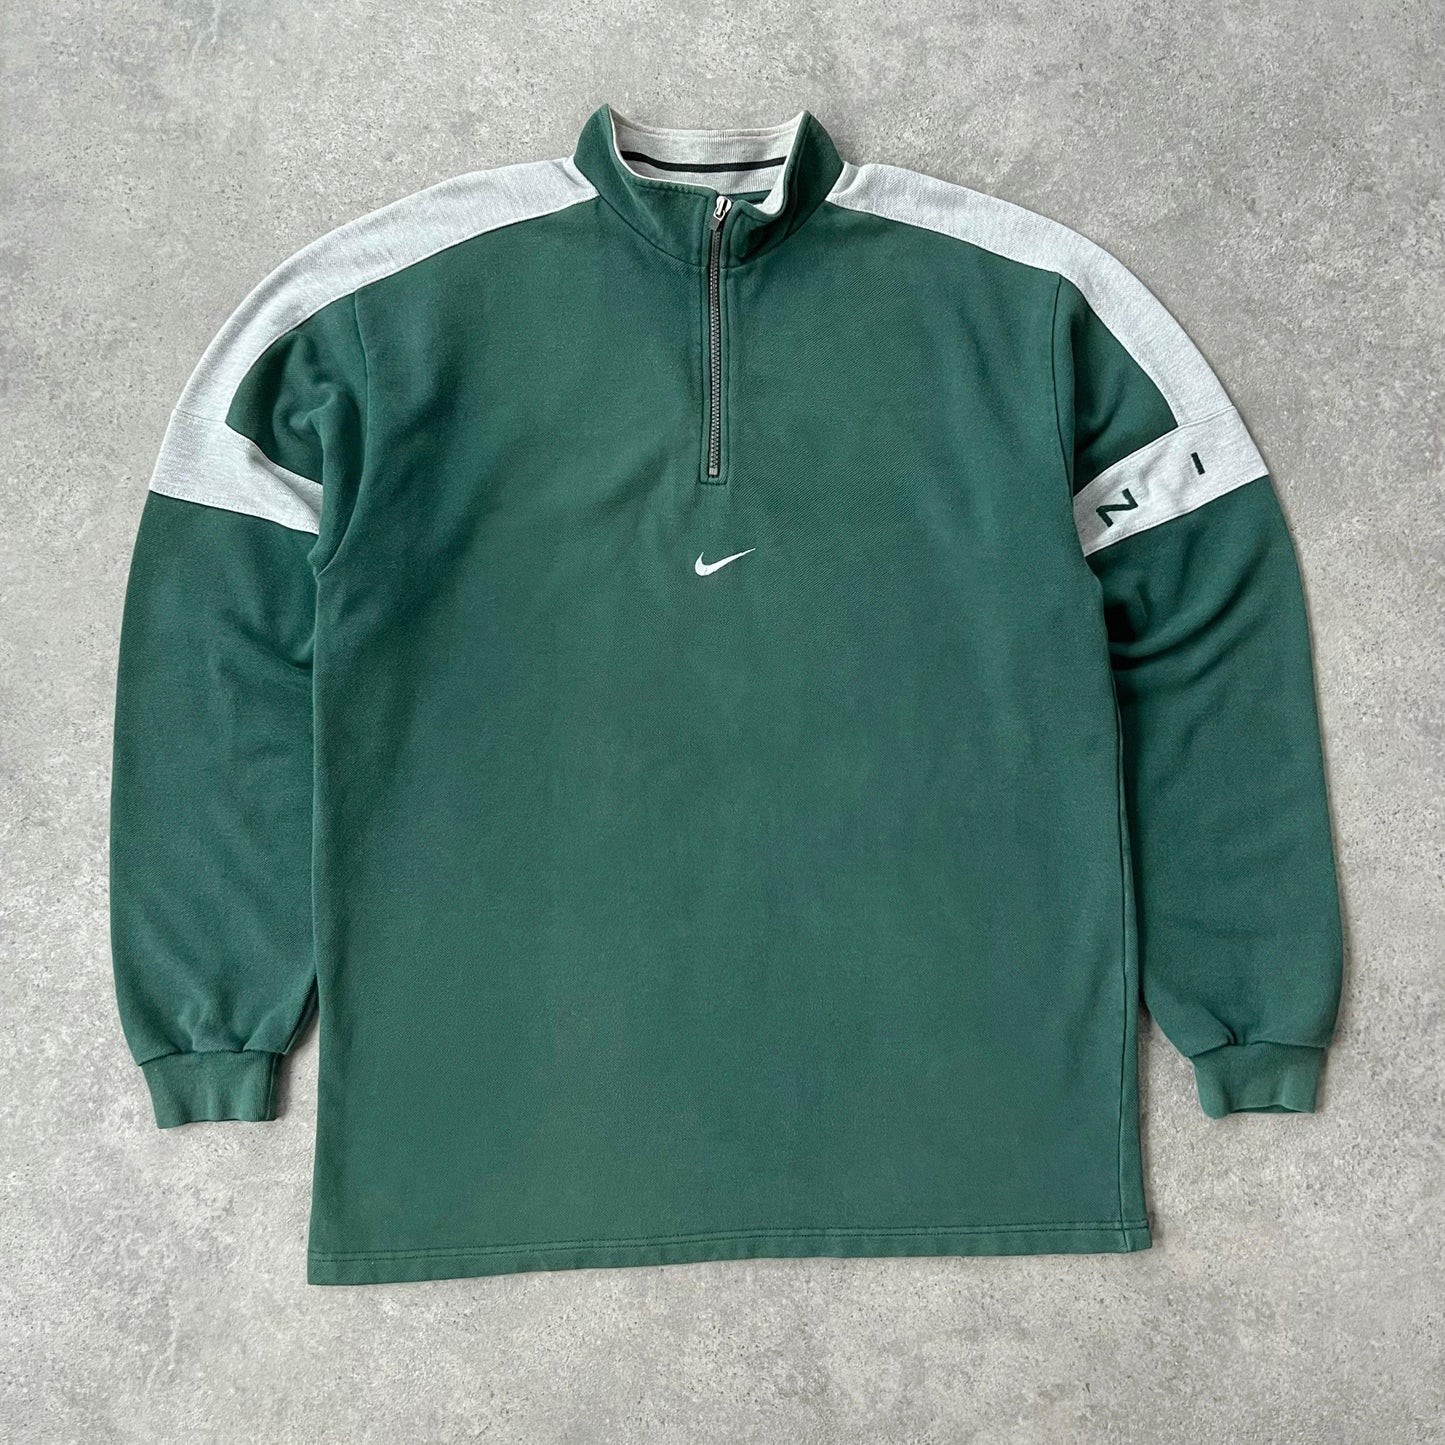 Nike 1990s 1/4 zip heavyweight embroidered sweatshirt (XL) - Known Source